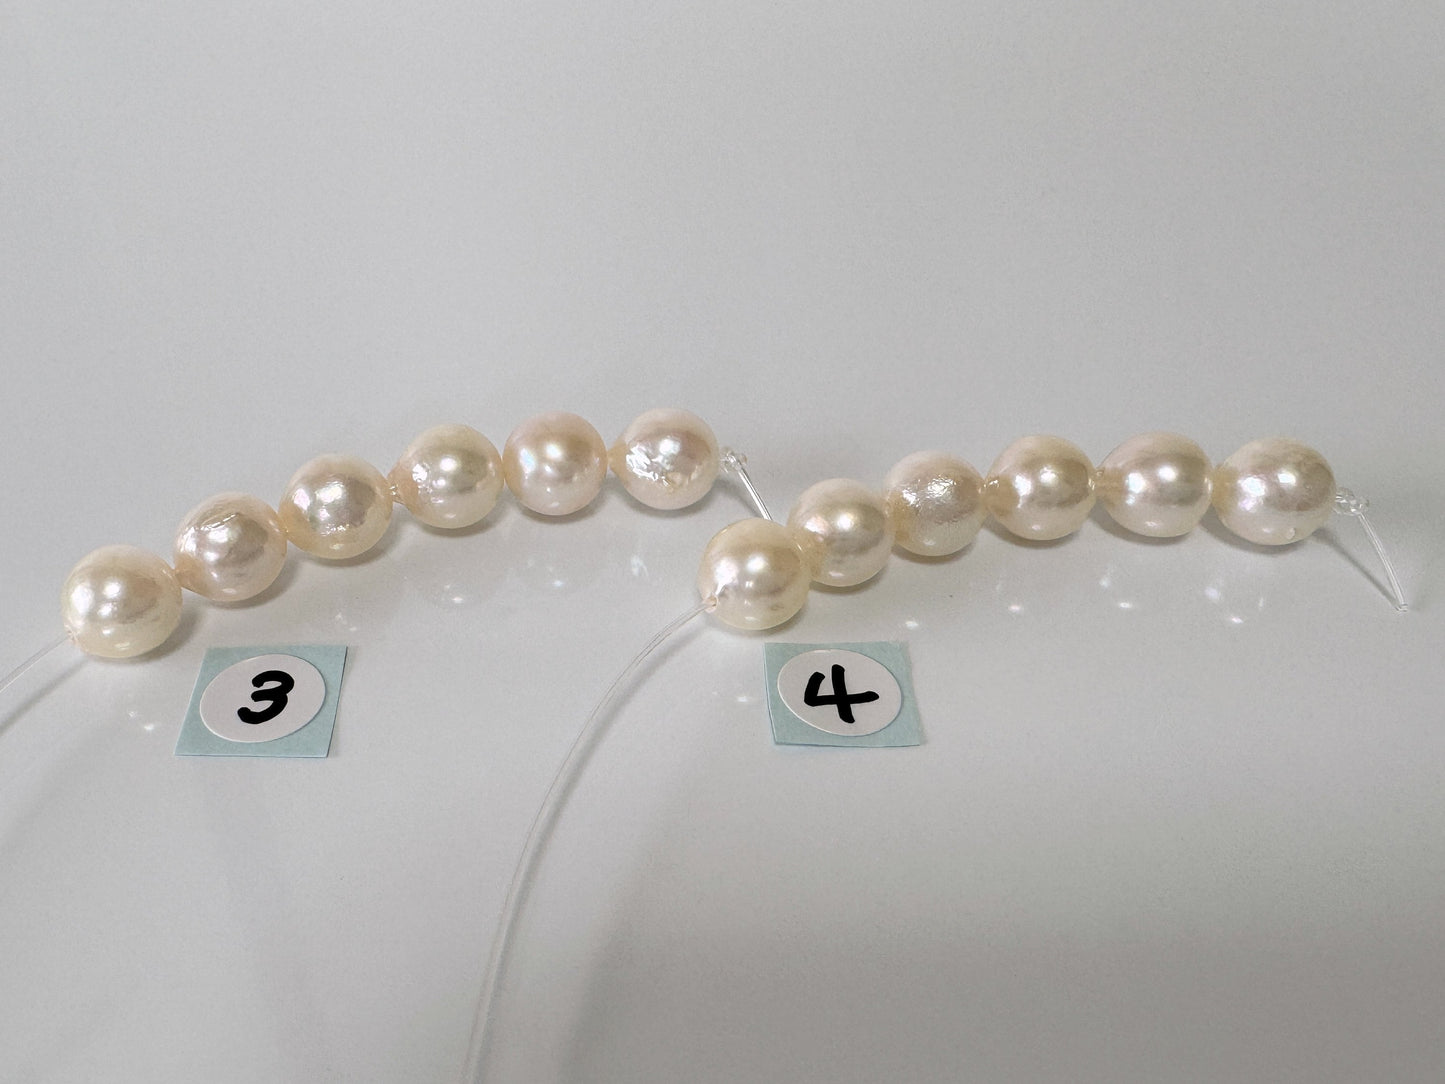 Japanese White-cream Akoya Pearl Beads, 7.5-8mm, Mini Strand, Short Strand, 6 Pieces, Genuine Akoya Pearl, Cultured in Sea Water